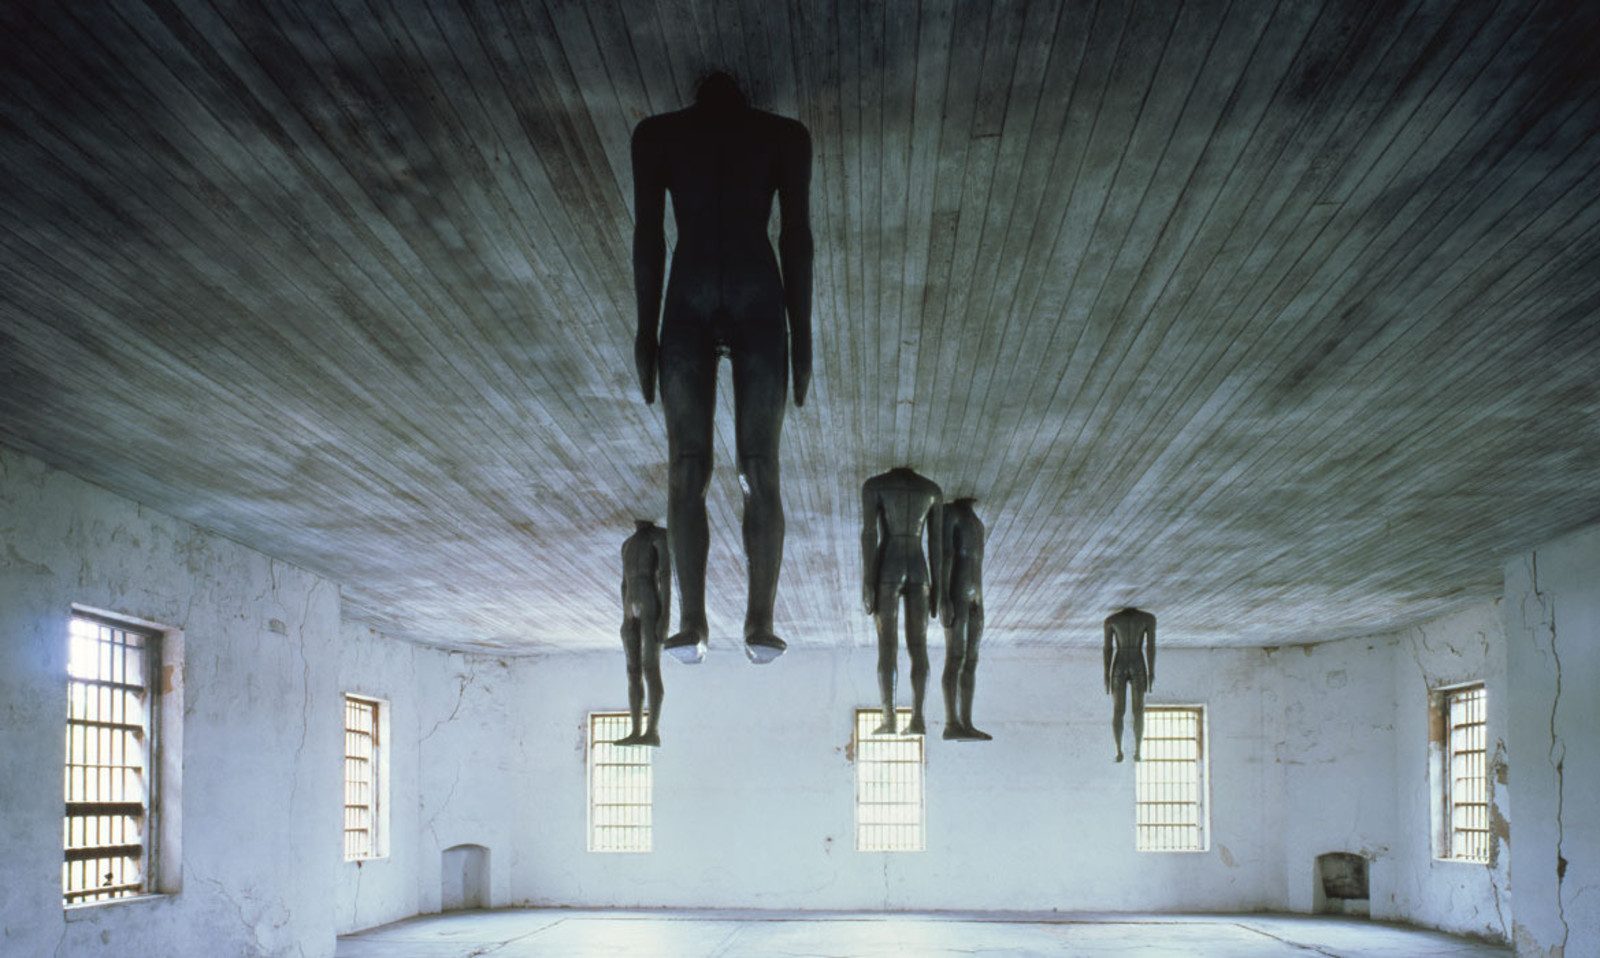 Bruce Nauman. Hanged Man. 1985. Neon tubing mounted on metal monolith. 13.97 x 22 x 2.73 cm.